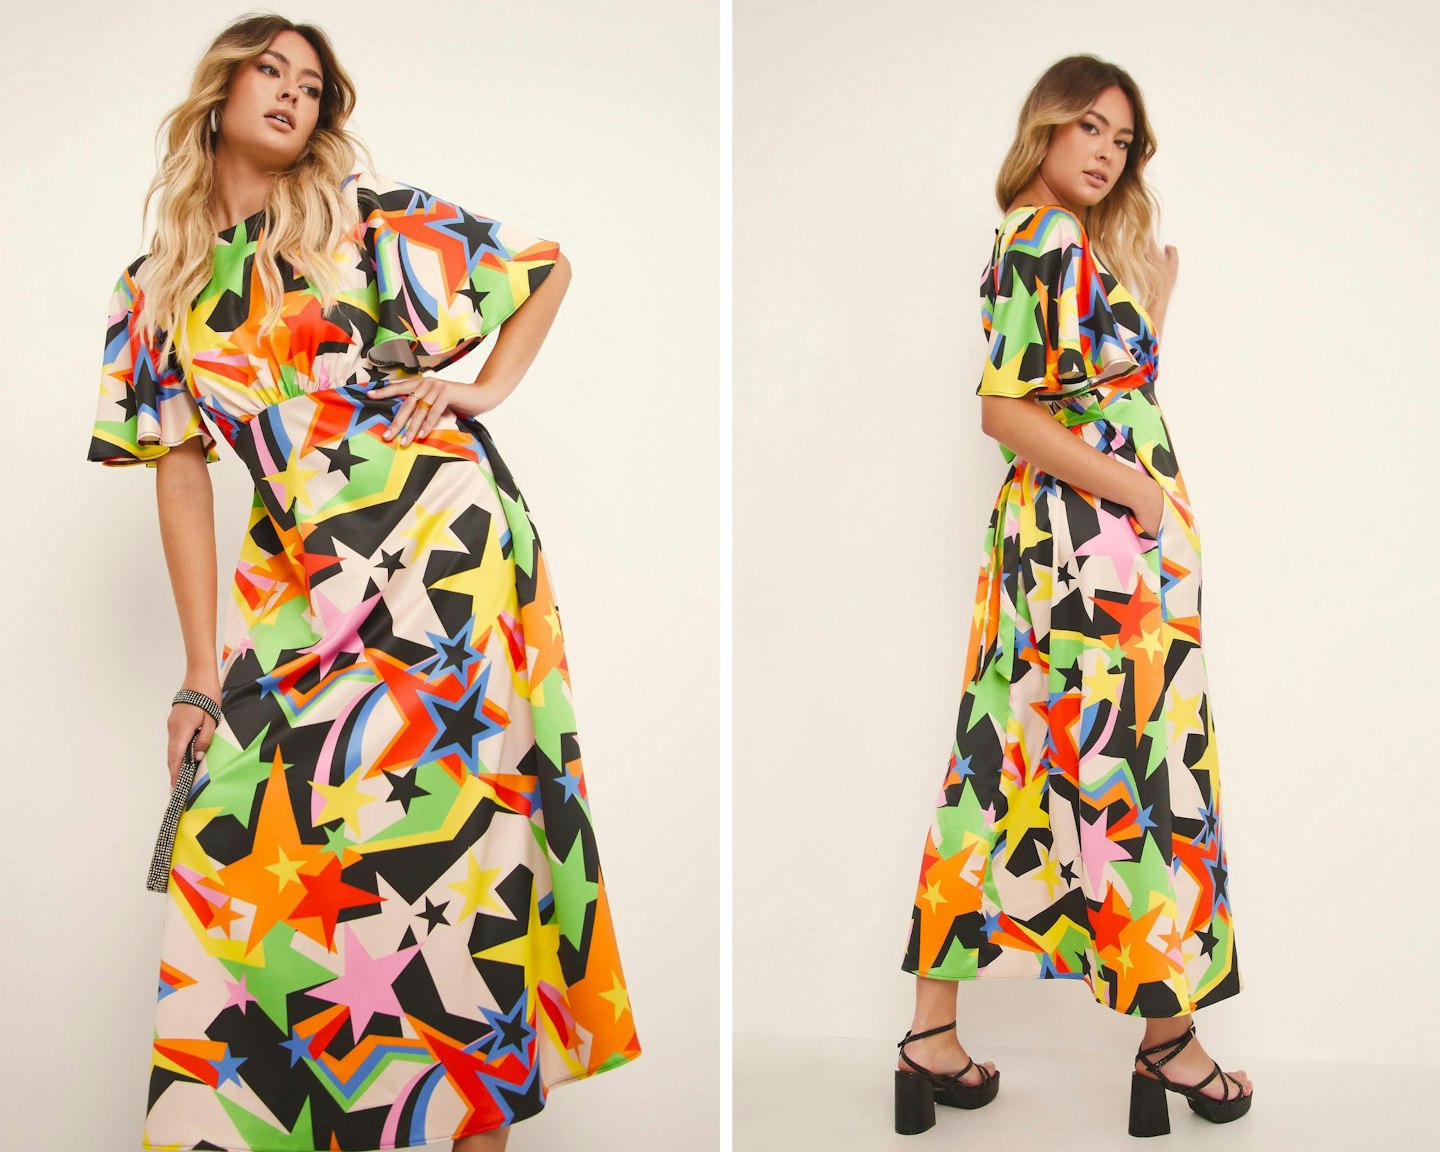 Alison's Star Print Dress Dupe